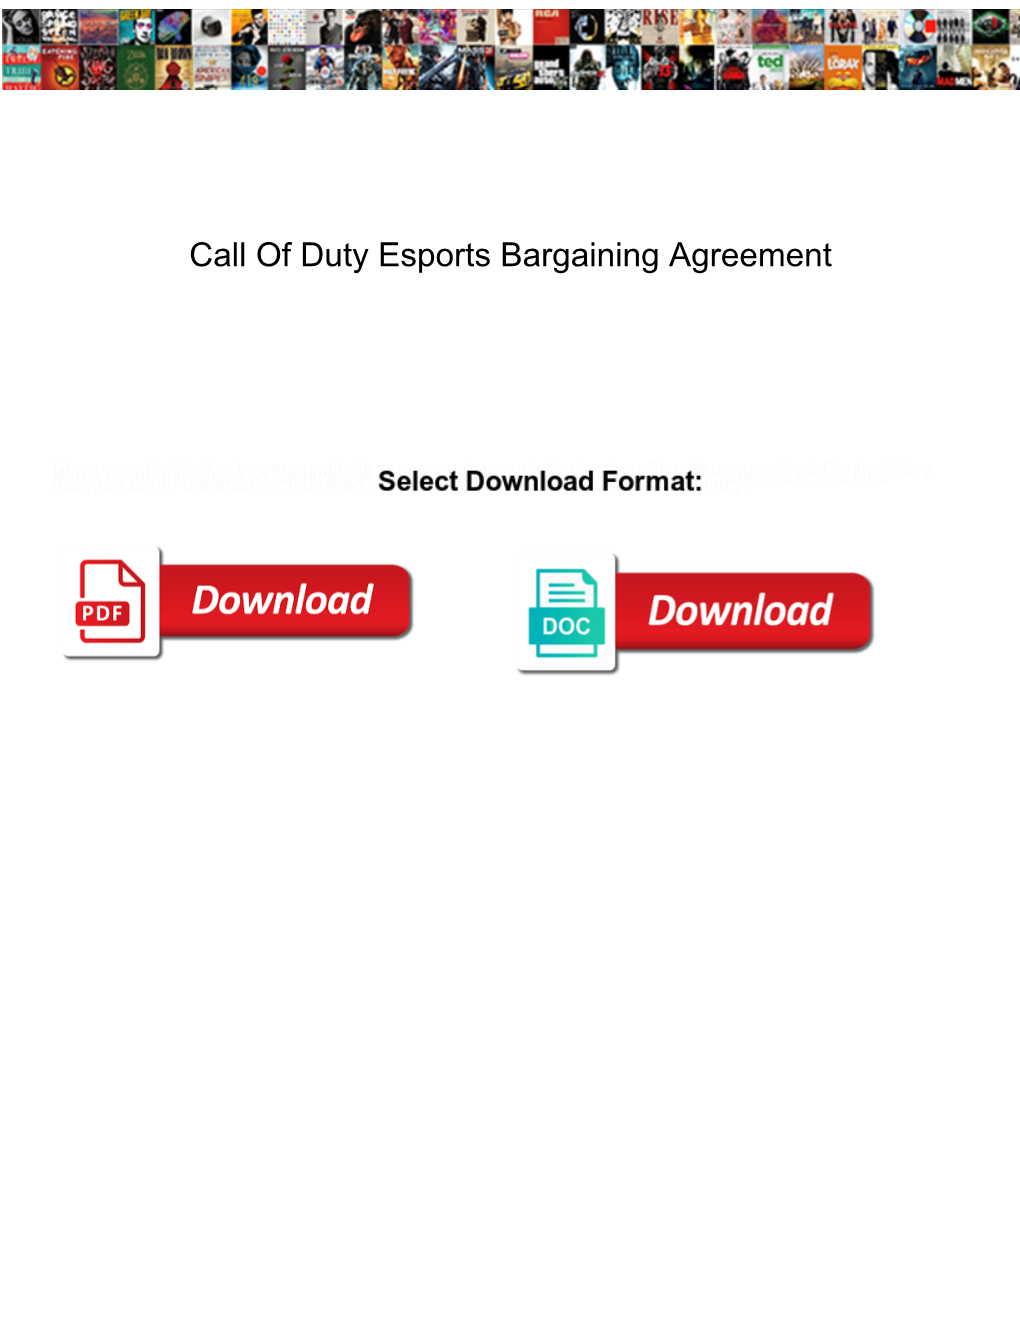 Call of Duty Esports Bargaining Agreement